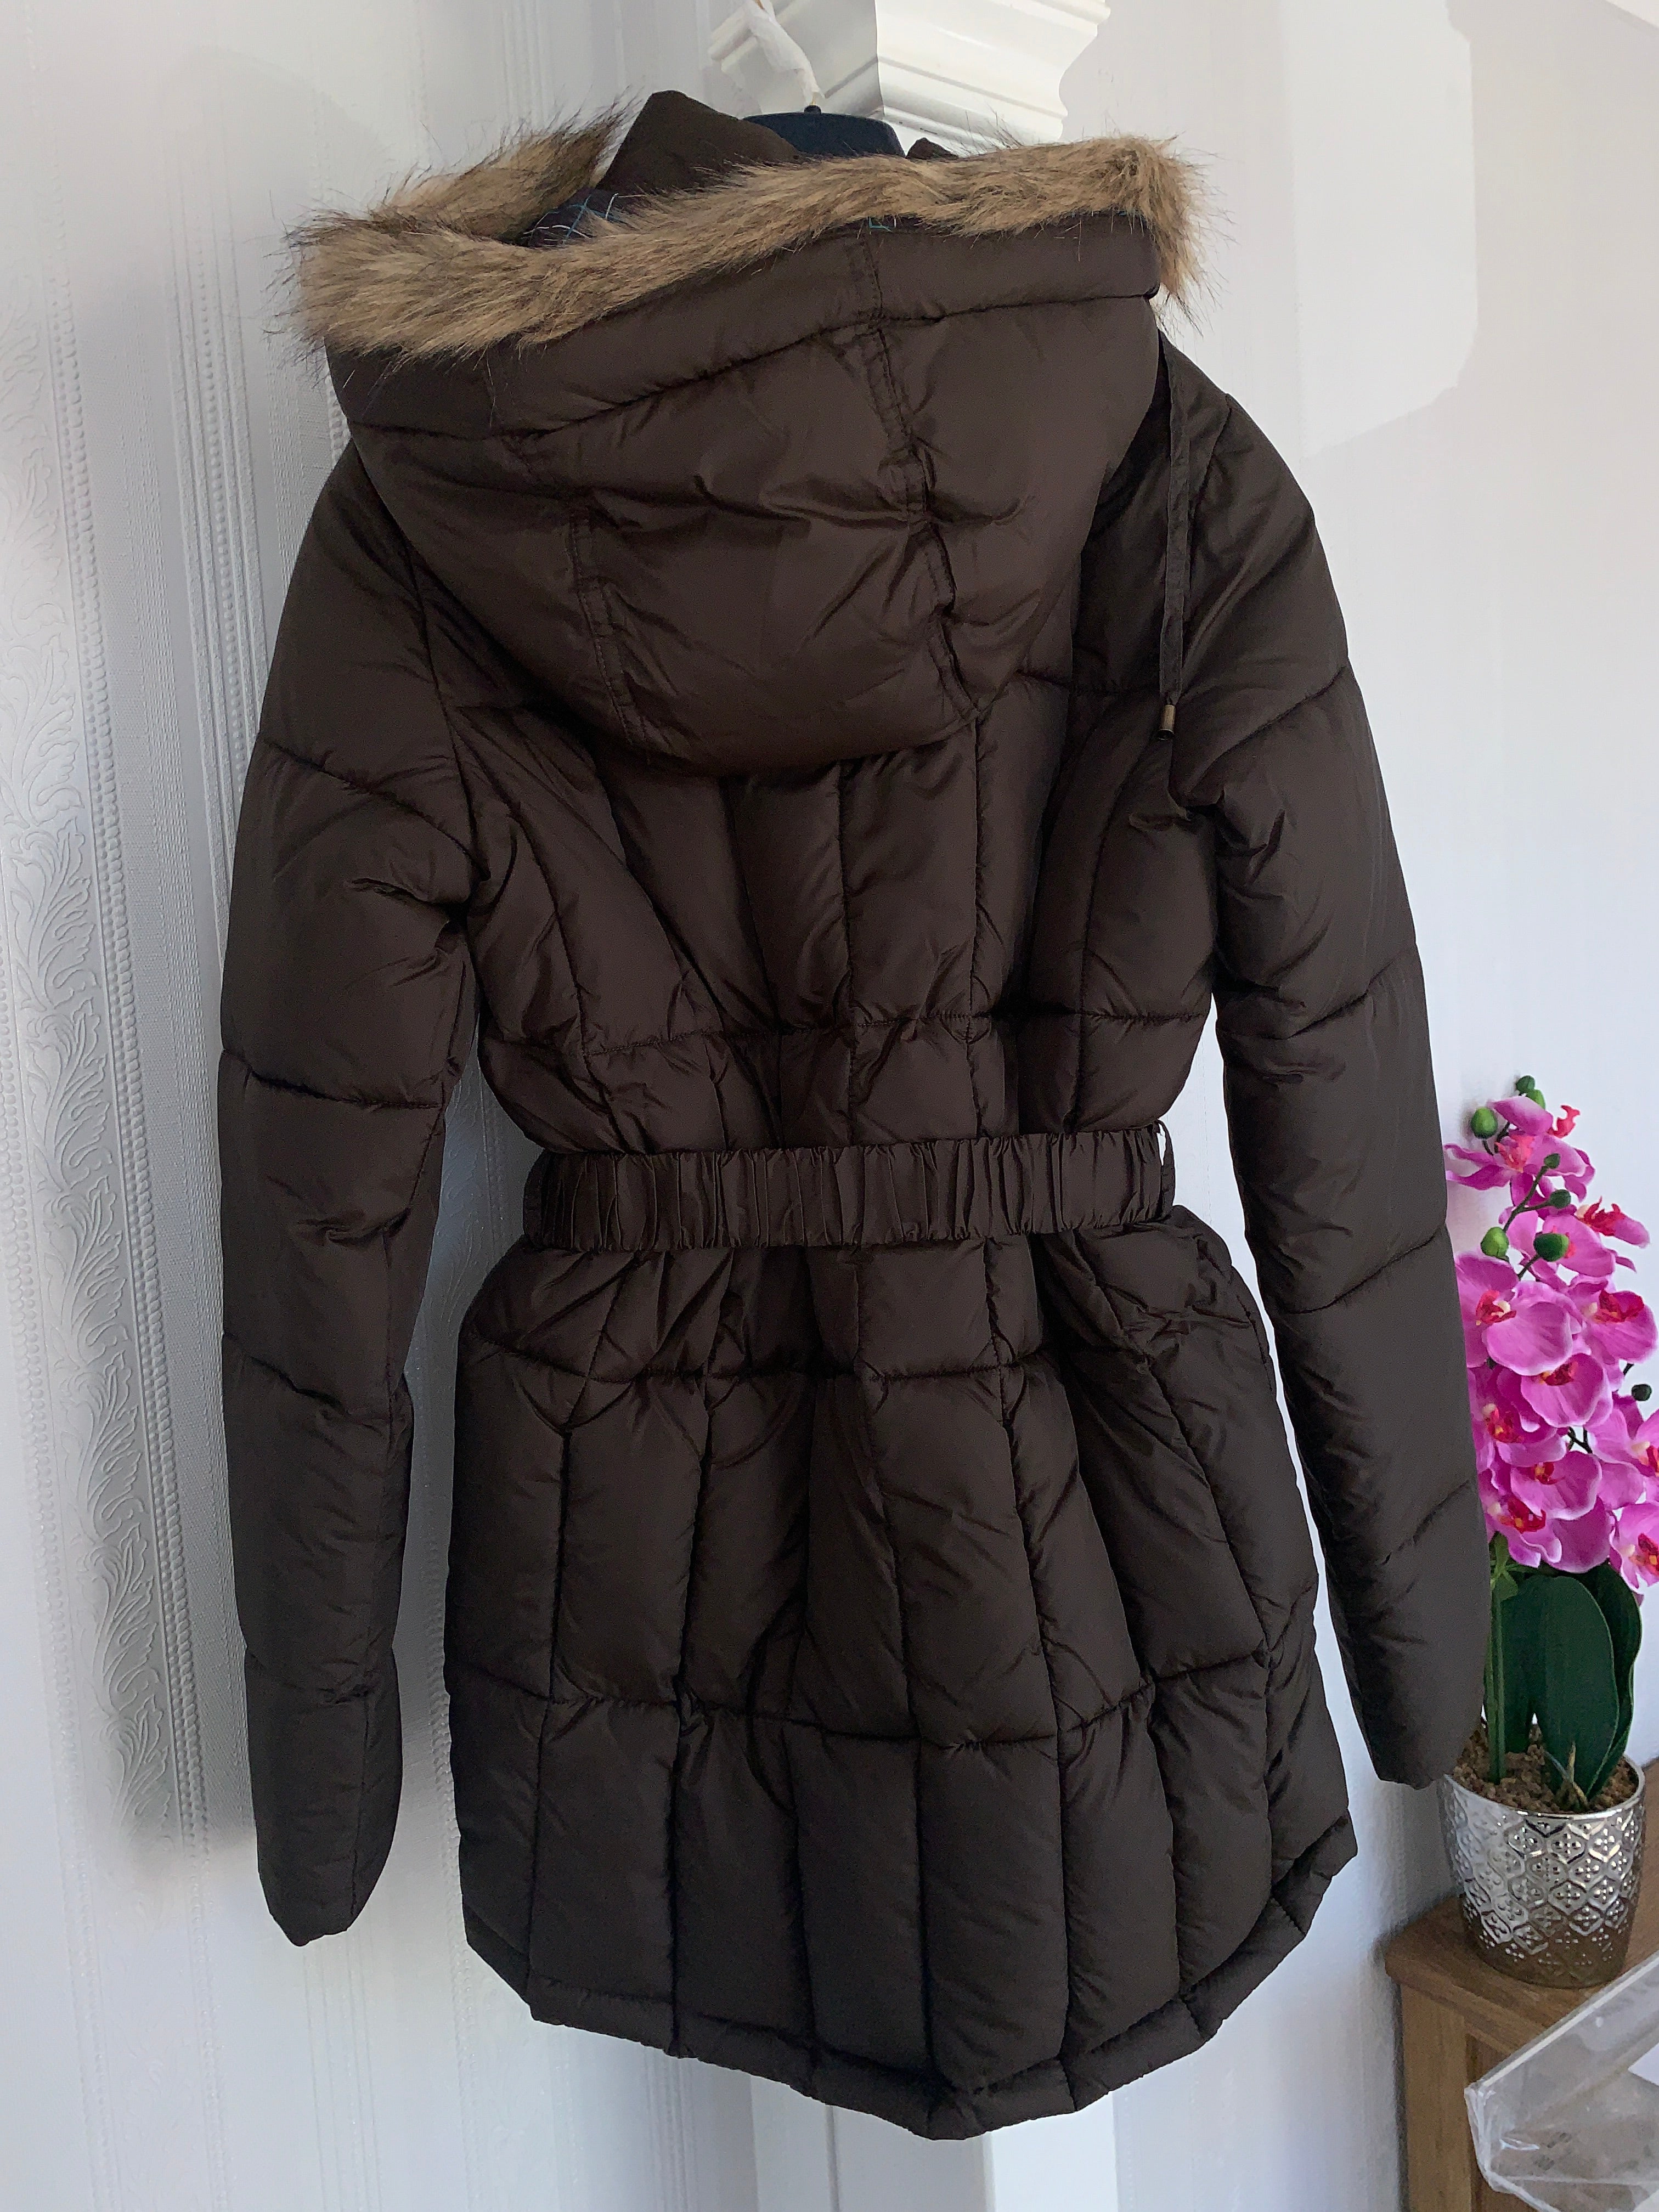 Puffa Mid Length Warm Winter Jacket - Size 8 - Rrp £120